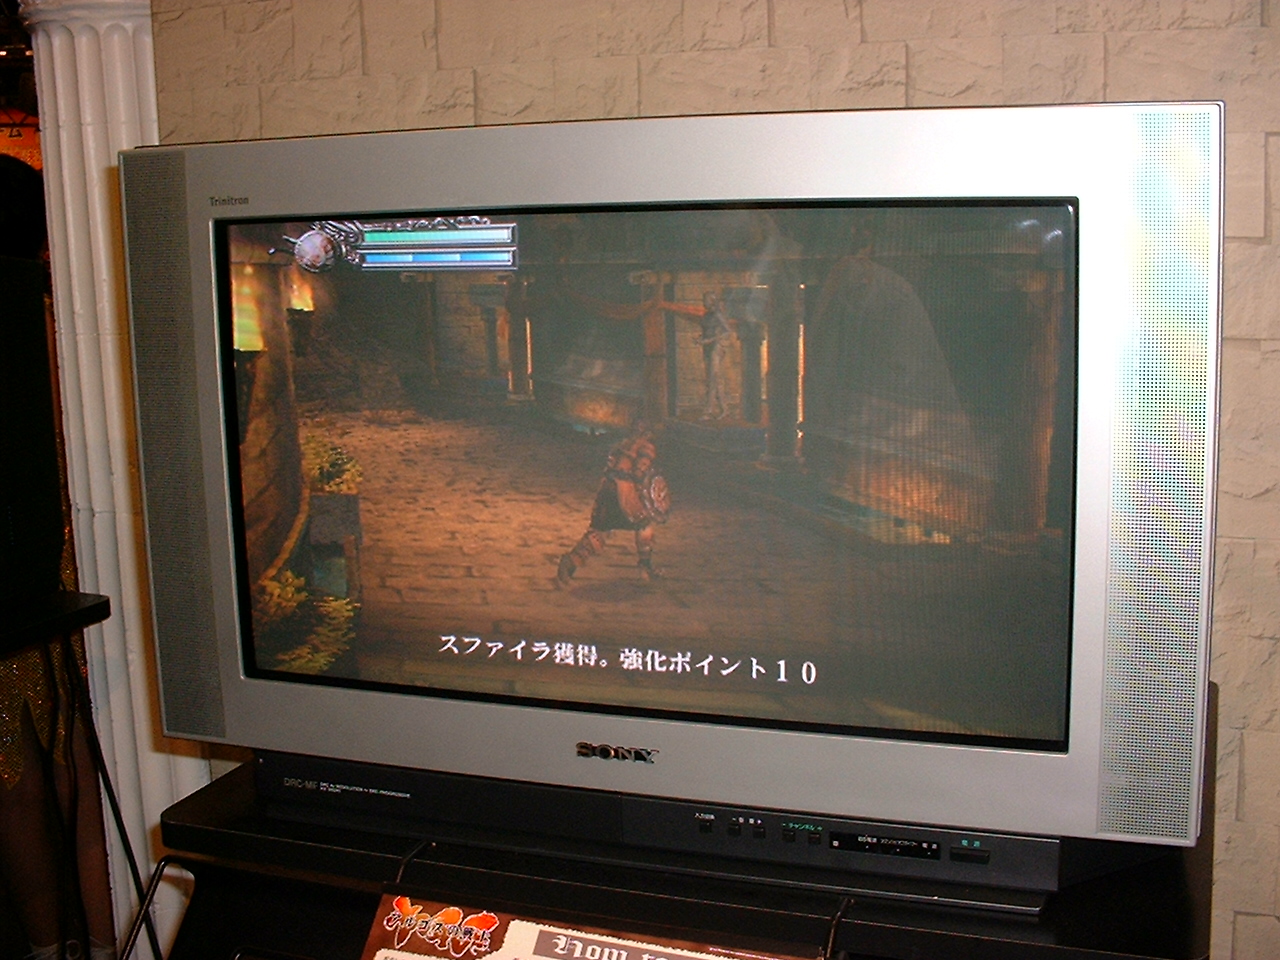 a tv screen shows rygar gameplay